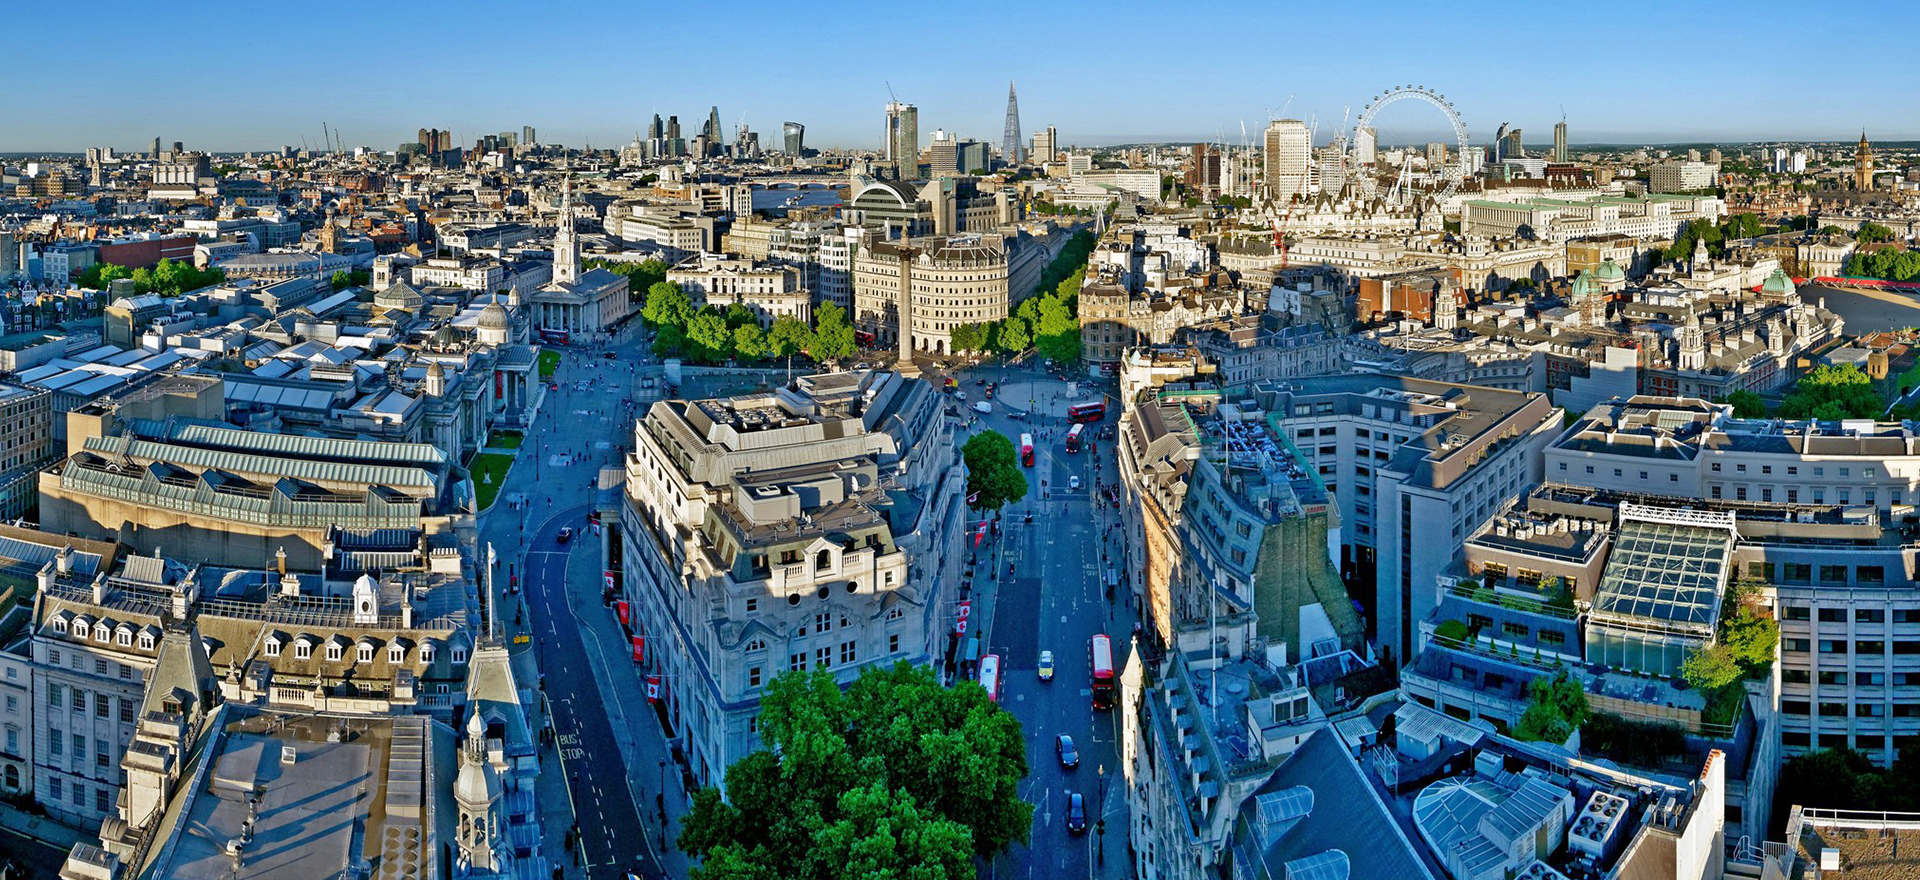 Housing Secretary directs amendments to the draft London Plan